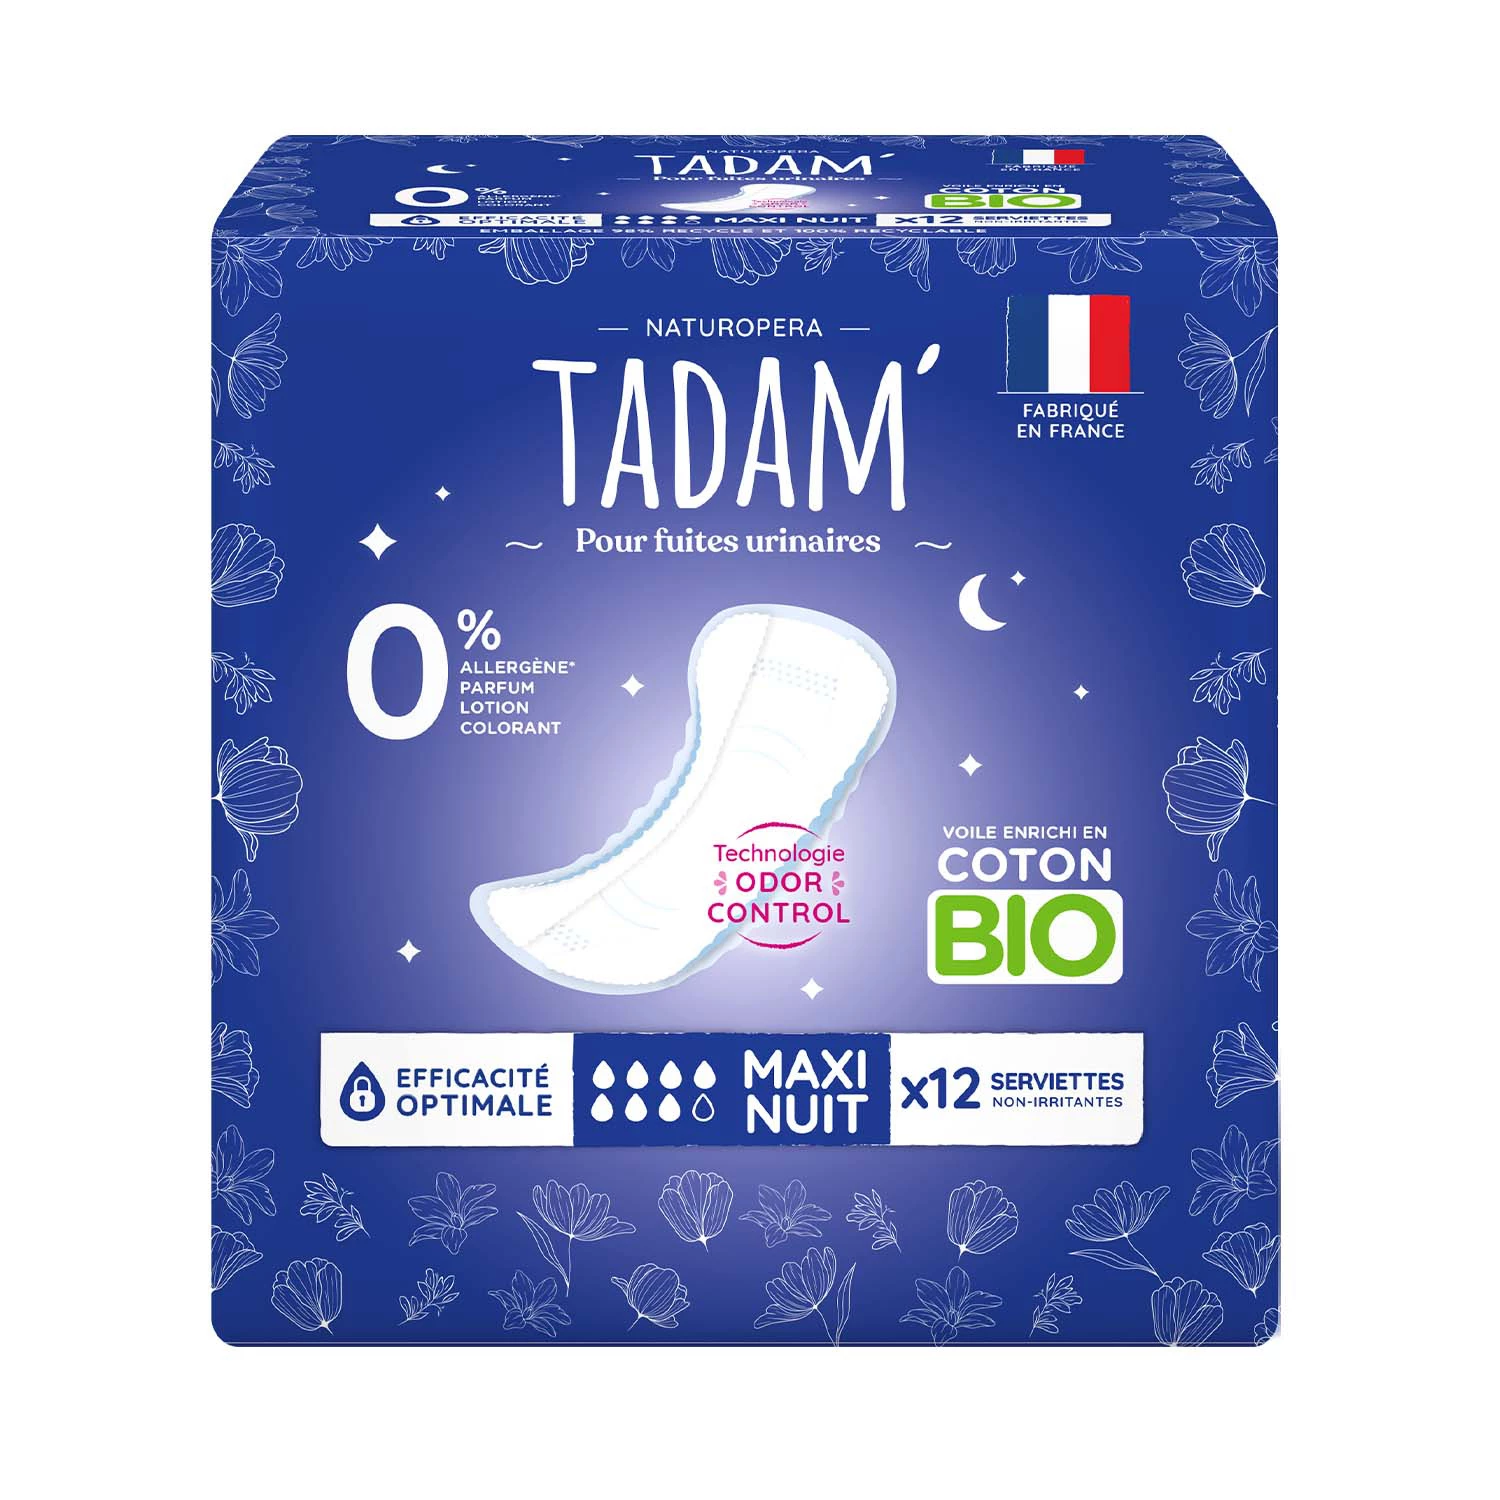 Extra towel for urinary leakage - TADAM